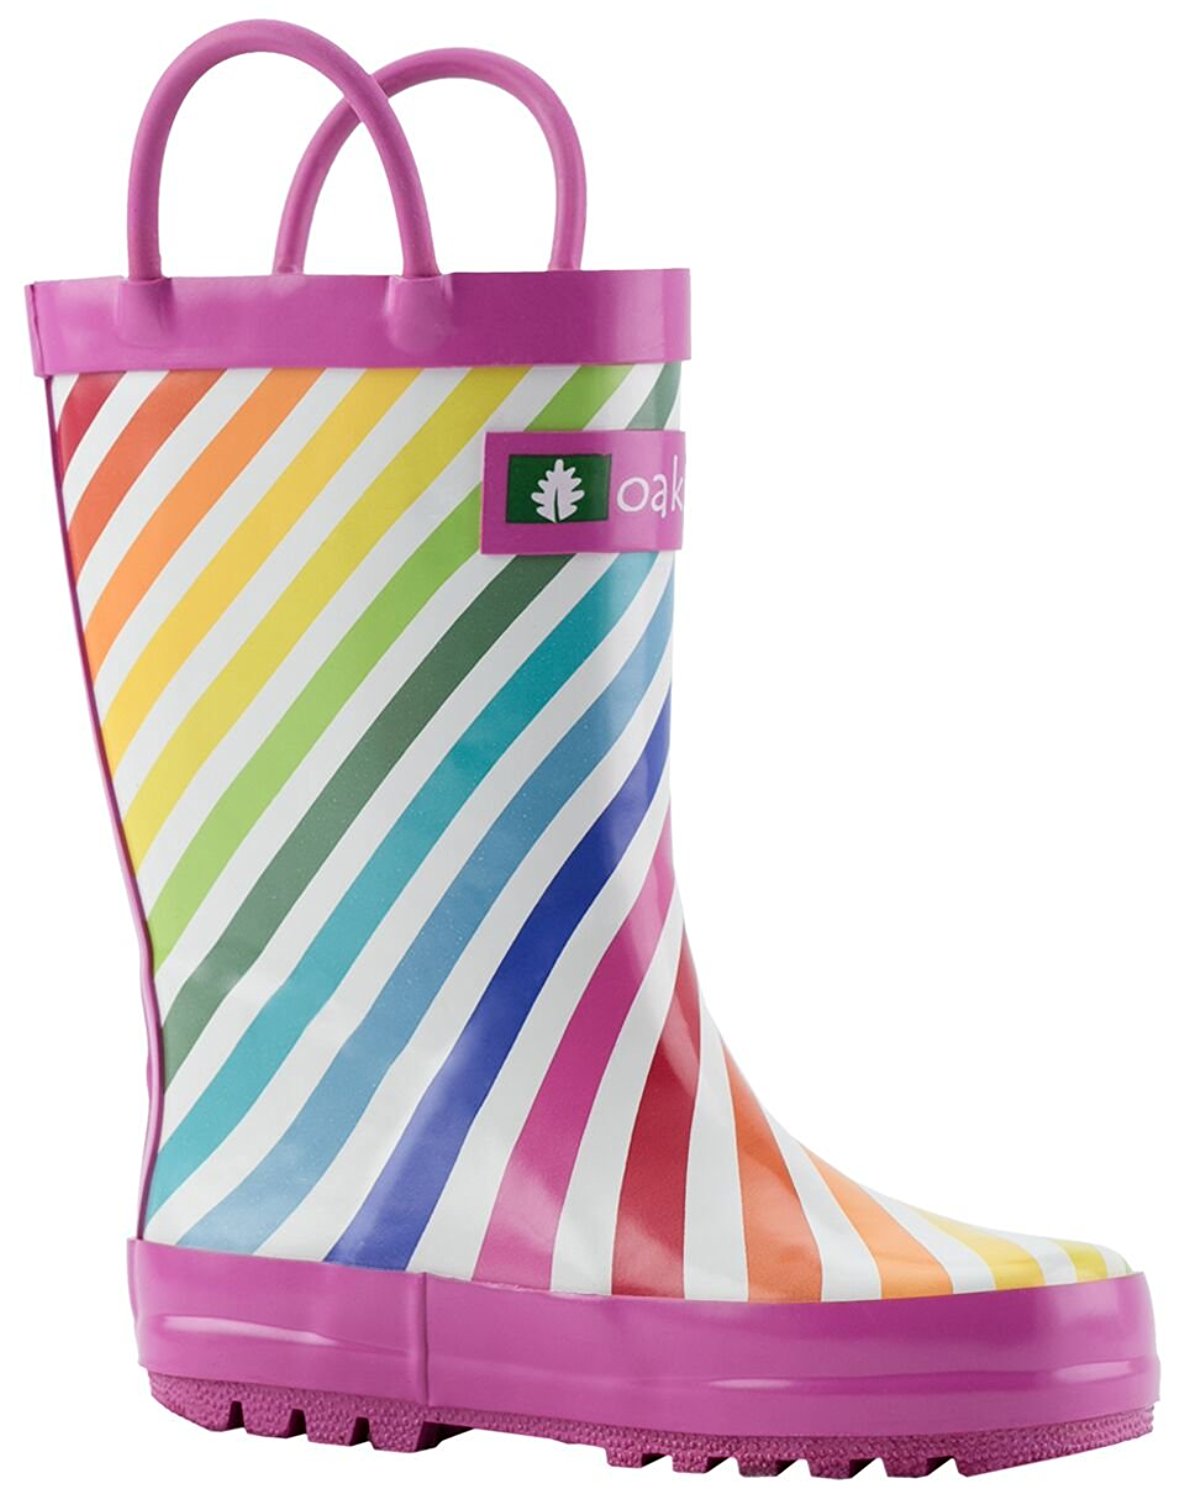 Spring rain boots under $30: Rainbow stripes from Oakiwear